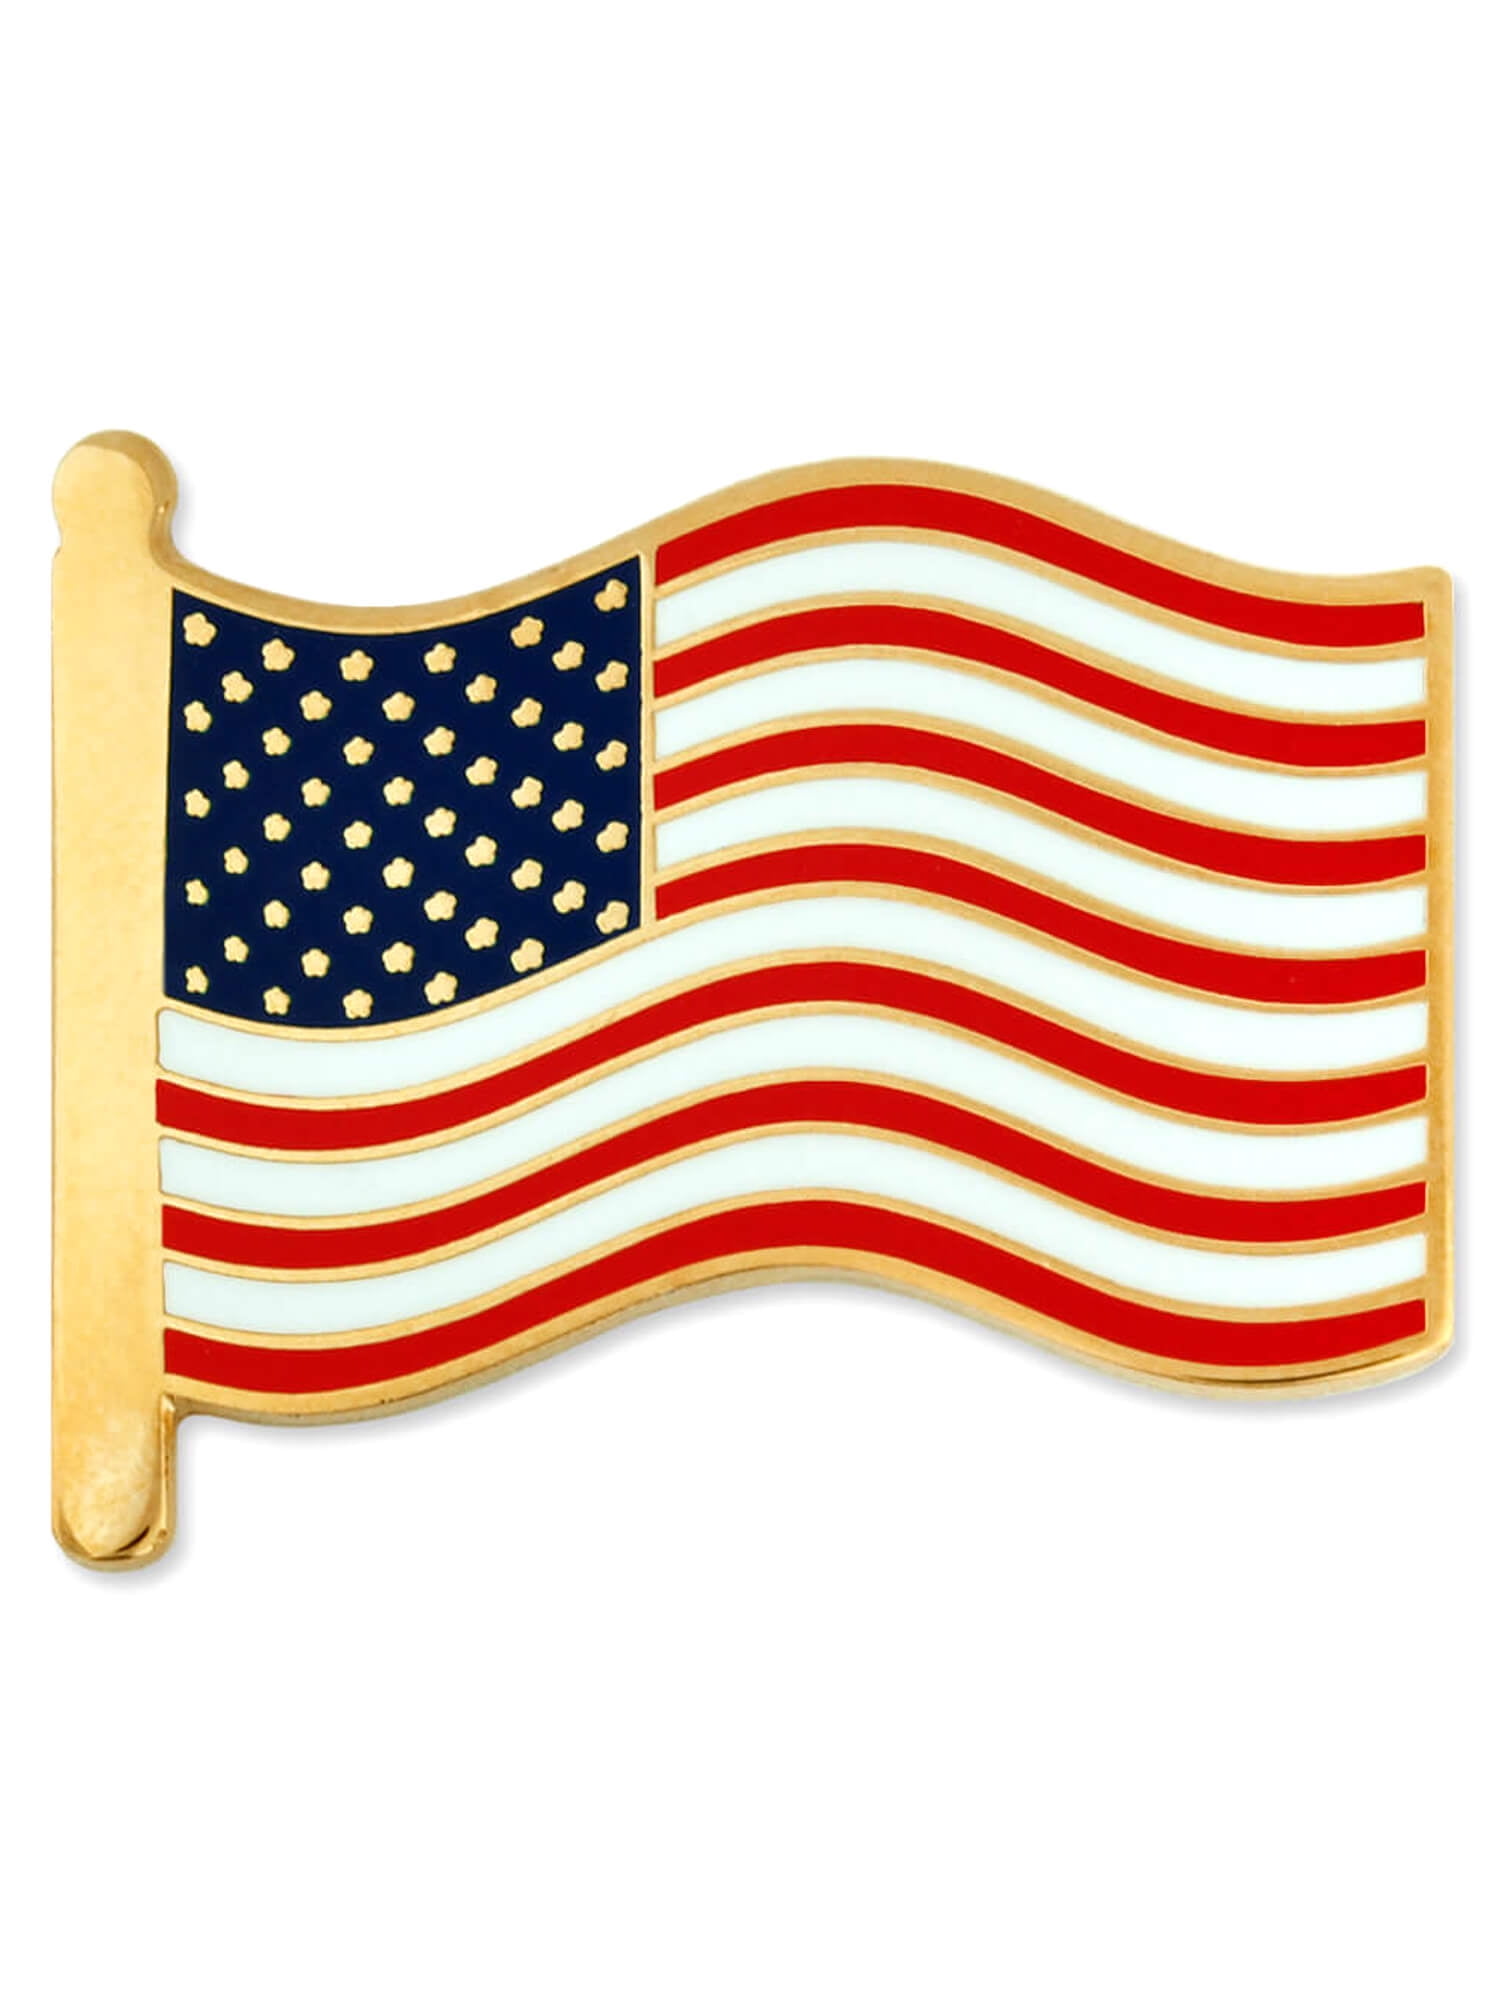 NEW Lot of 12 America Flag Enamel 1" Lapel Pins United States USA DISNEY US Pin 